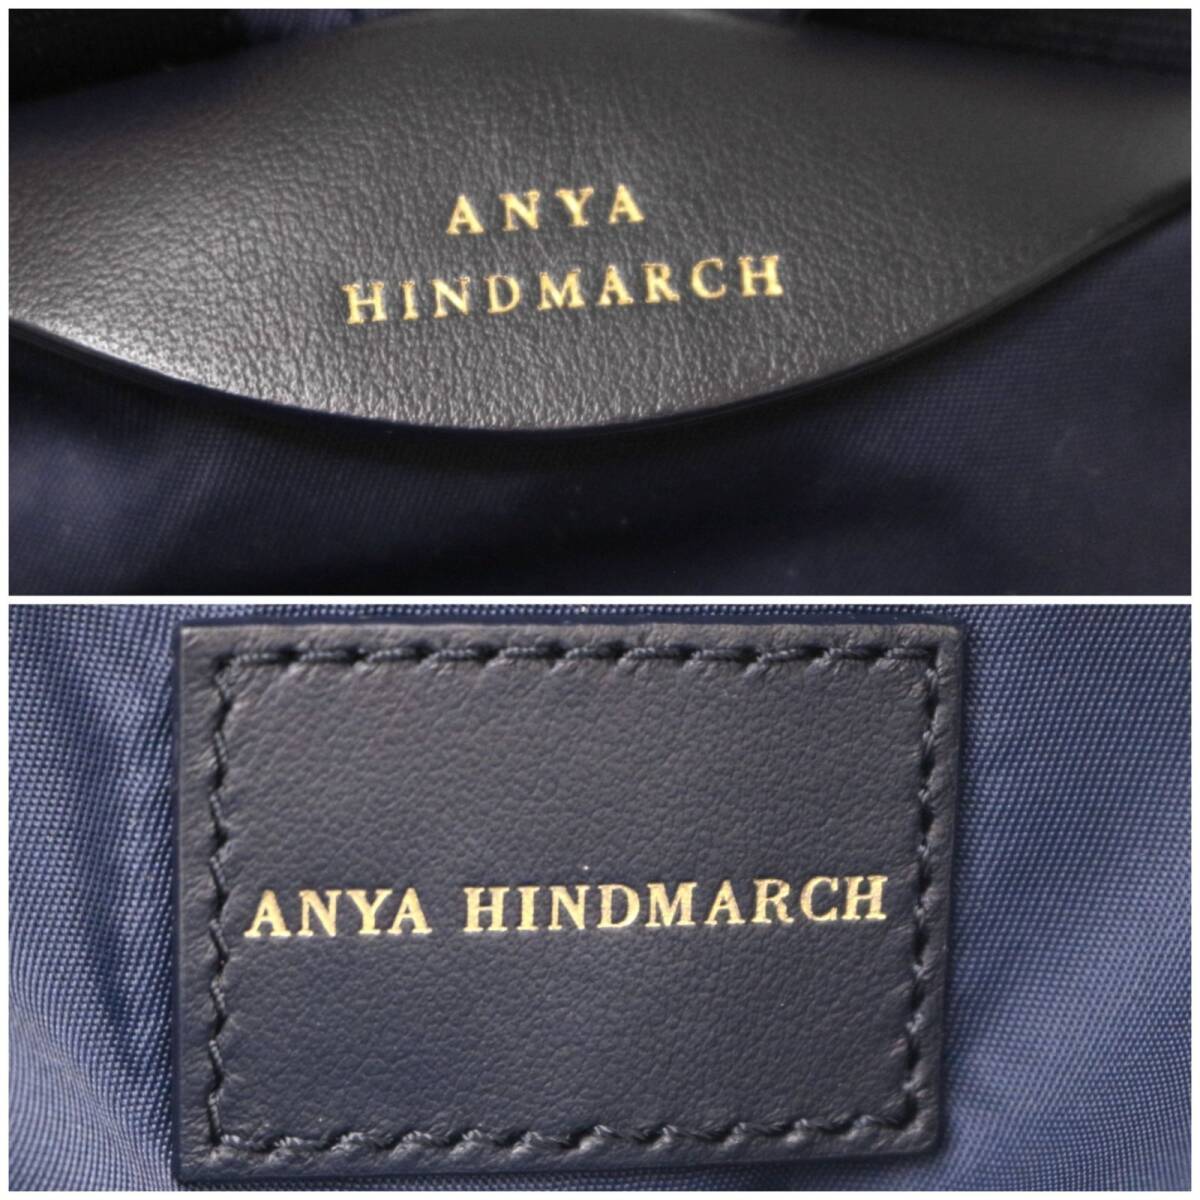  Anya Hindmarch CHUBBY WINK rucksack backpack Smile smiley smile smily nylon navy blue navy navy Anya Hindmarch